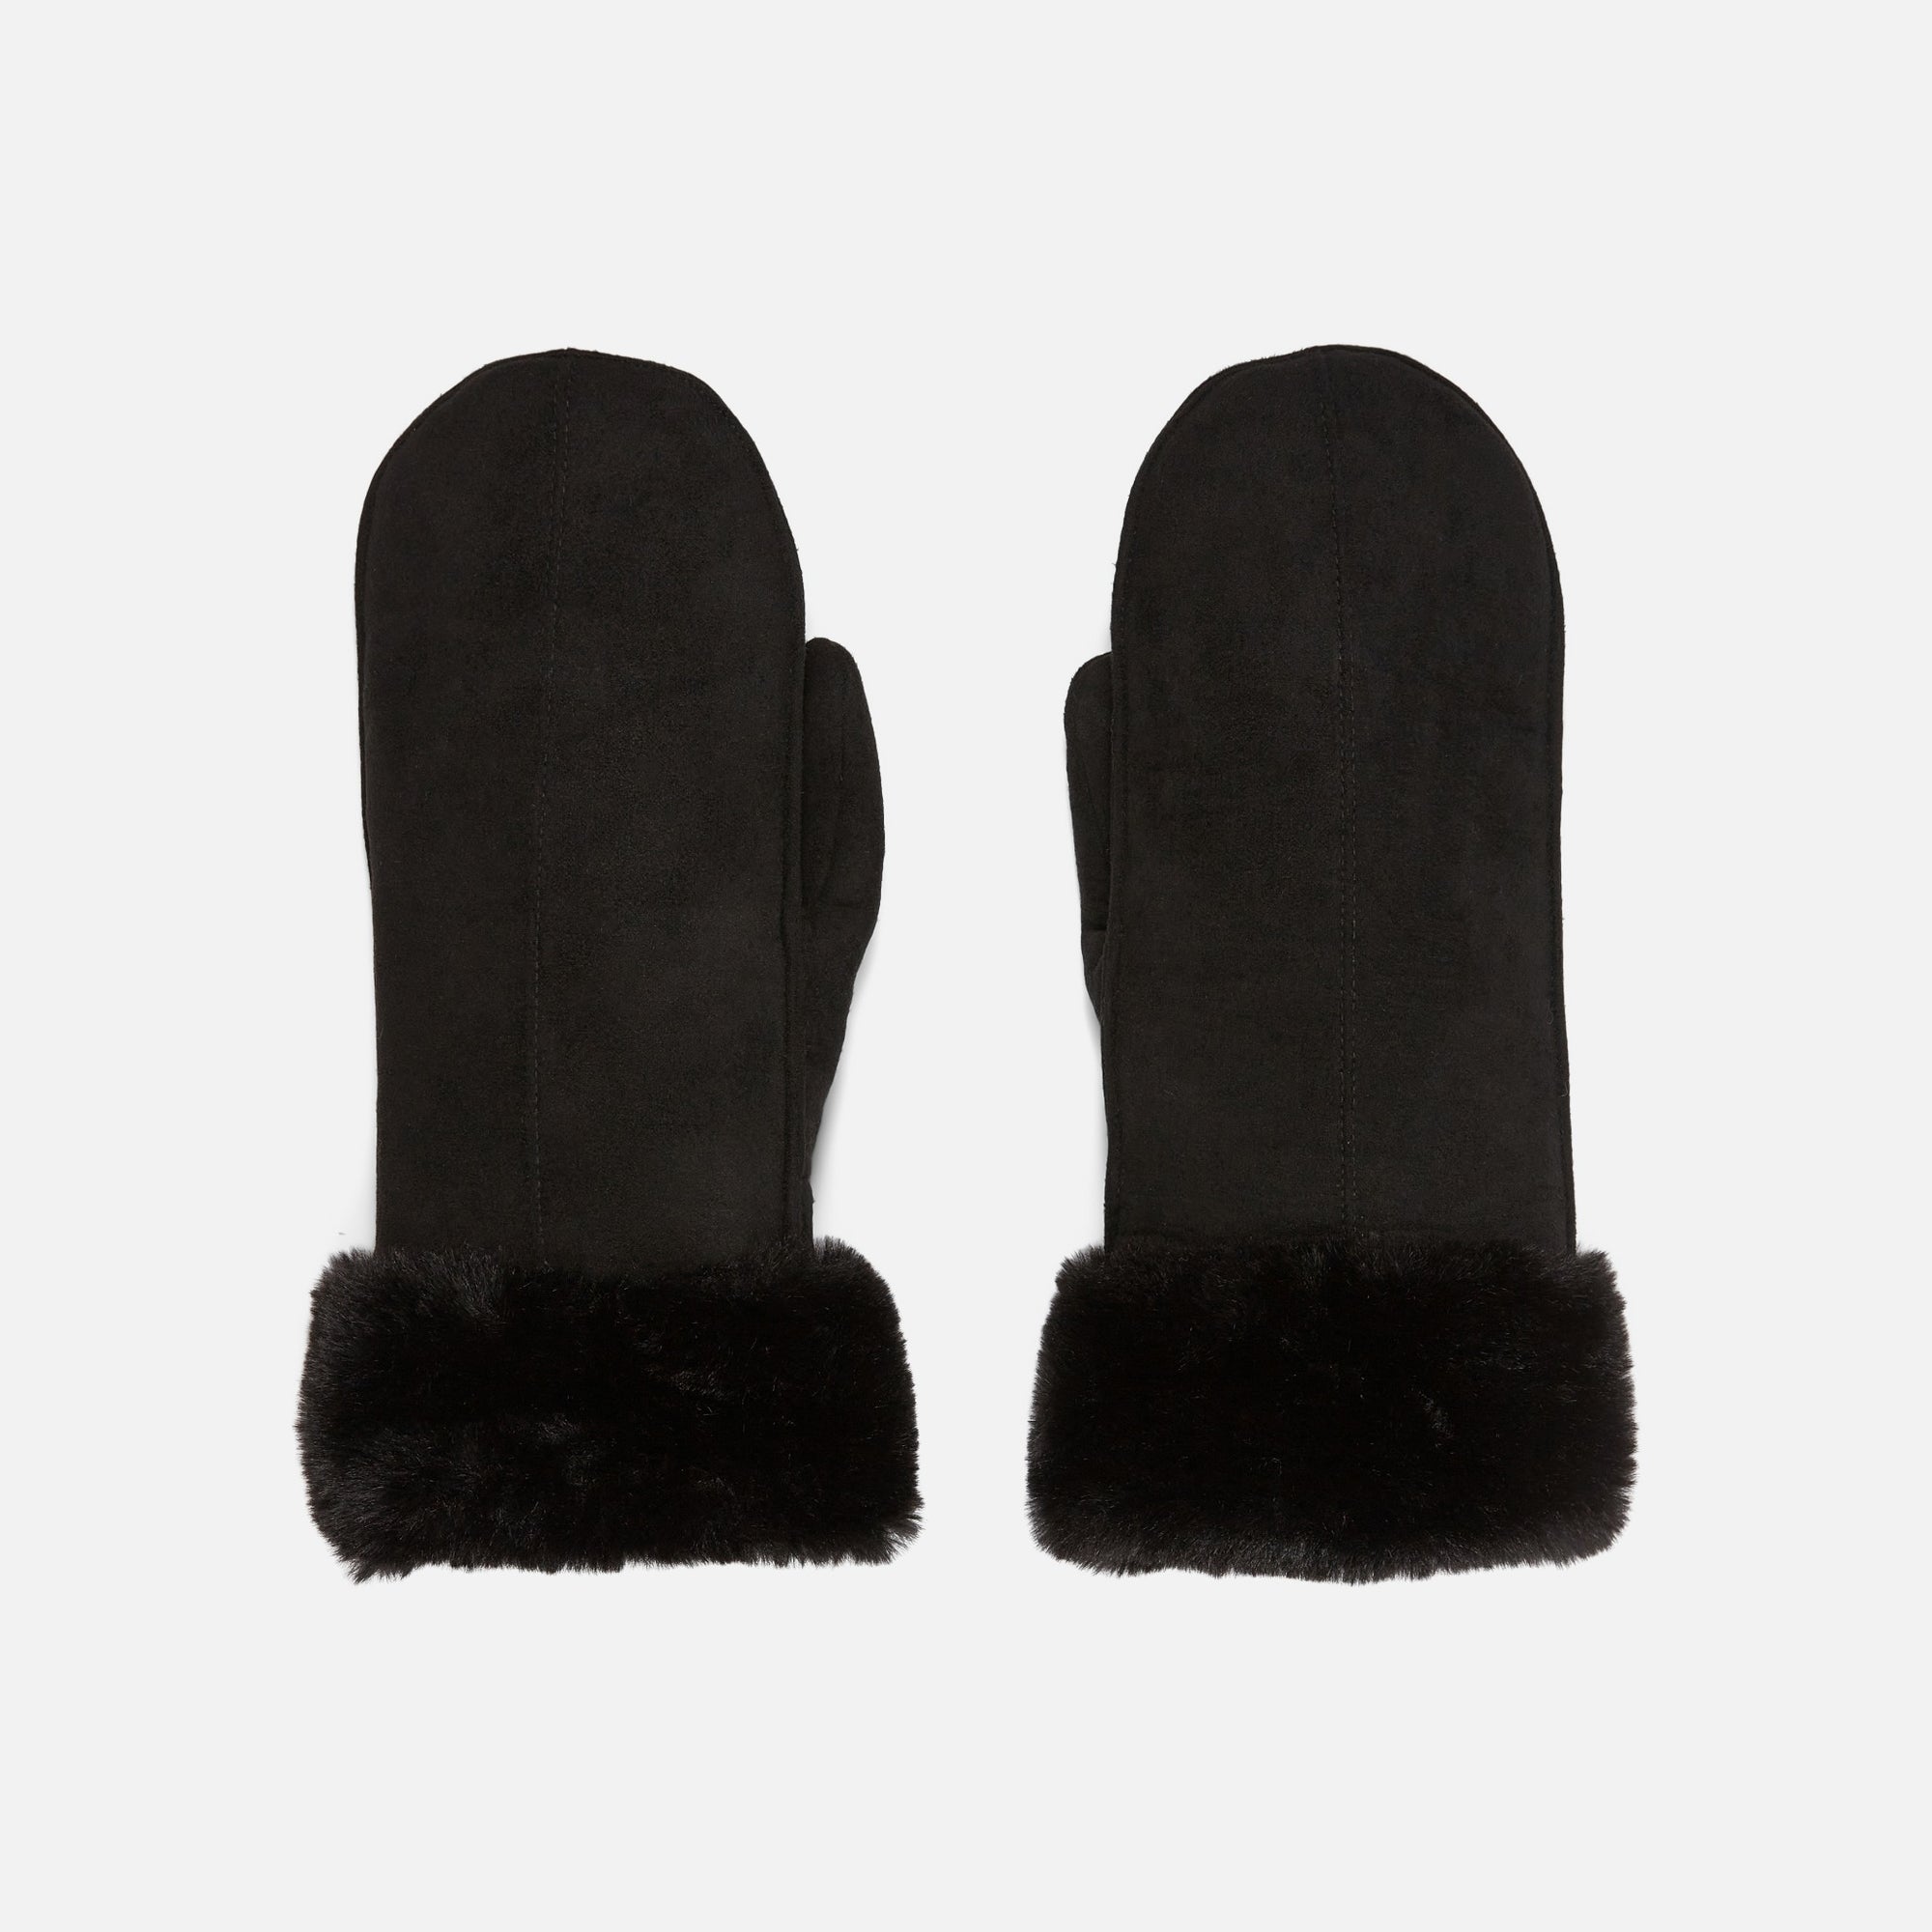 Black mittens with black faux fur cuff